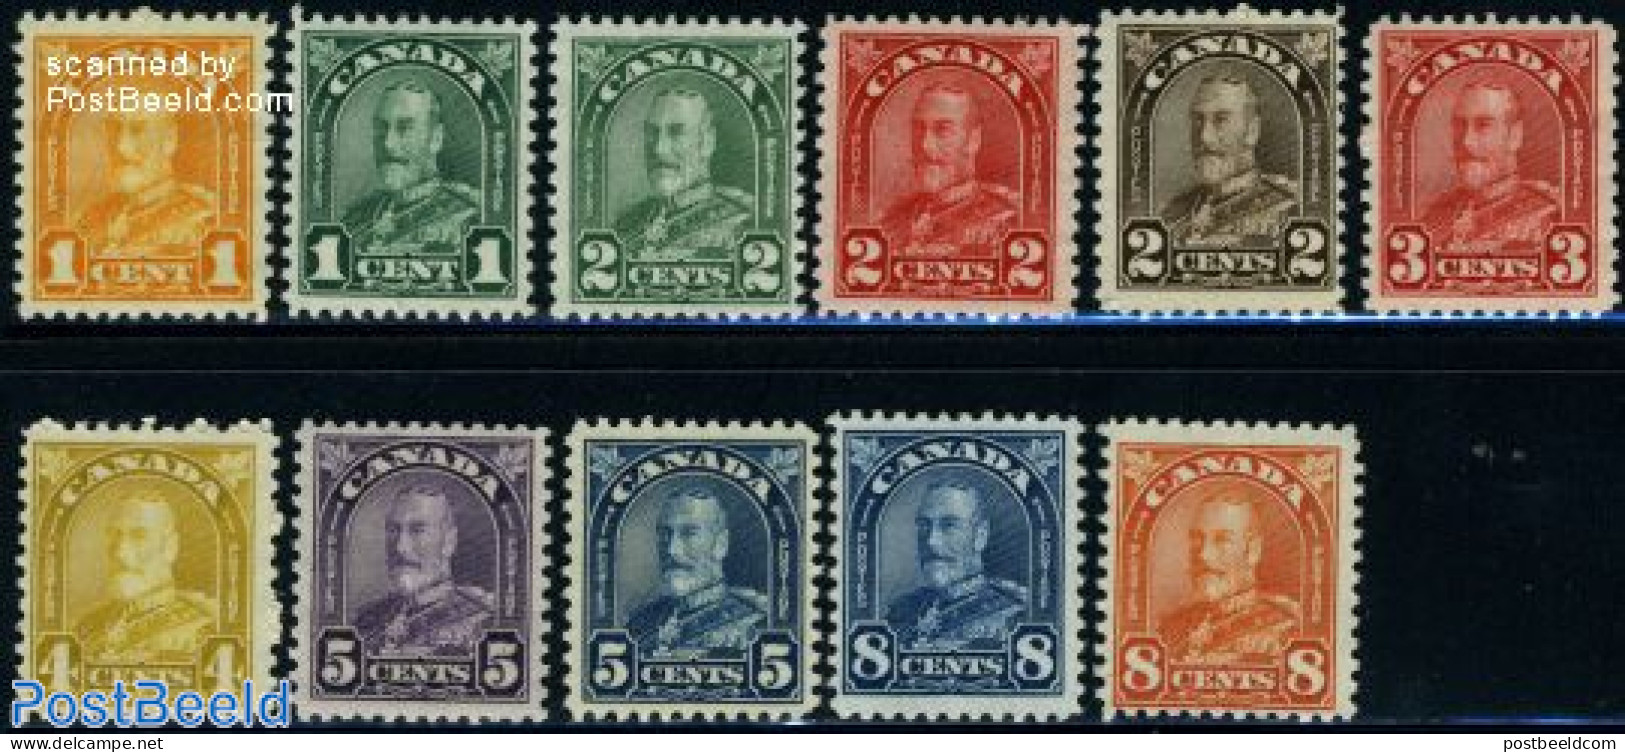 Canada 1930 Definitives 11v, Mint NH - Nuovi